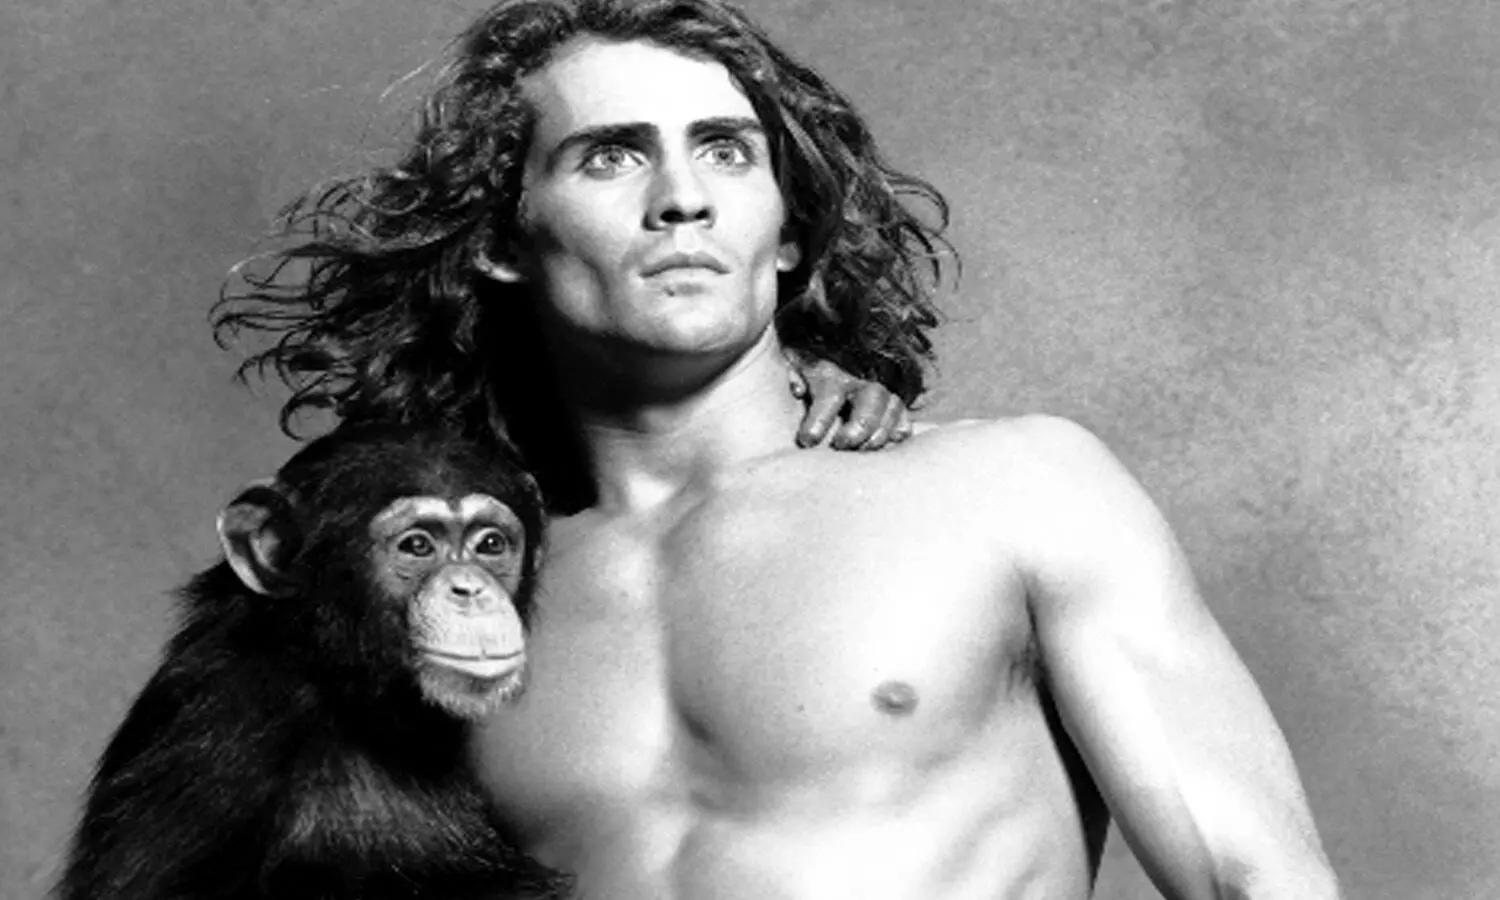 Tarzan Actor Joe Lara dies in Plane Crash